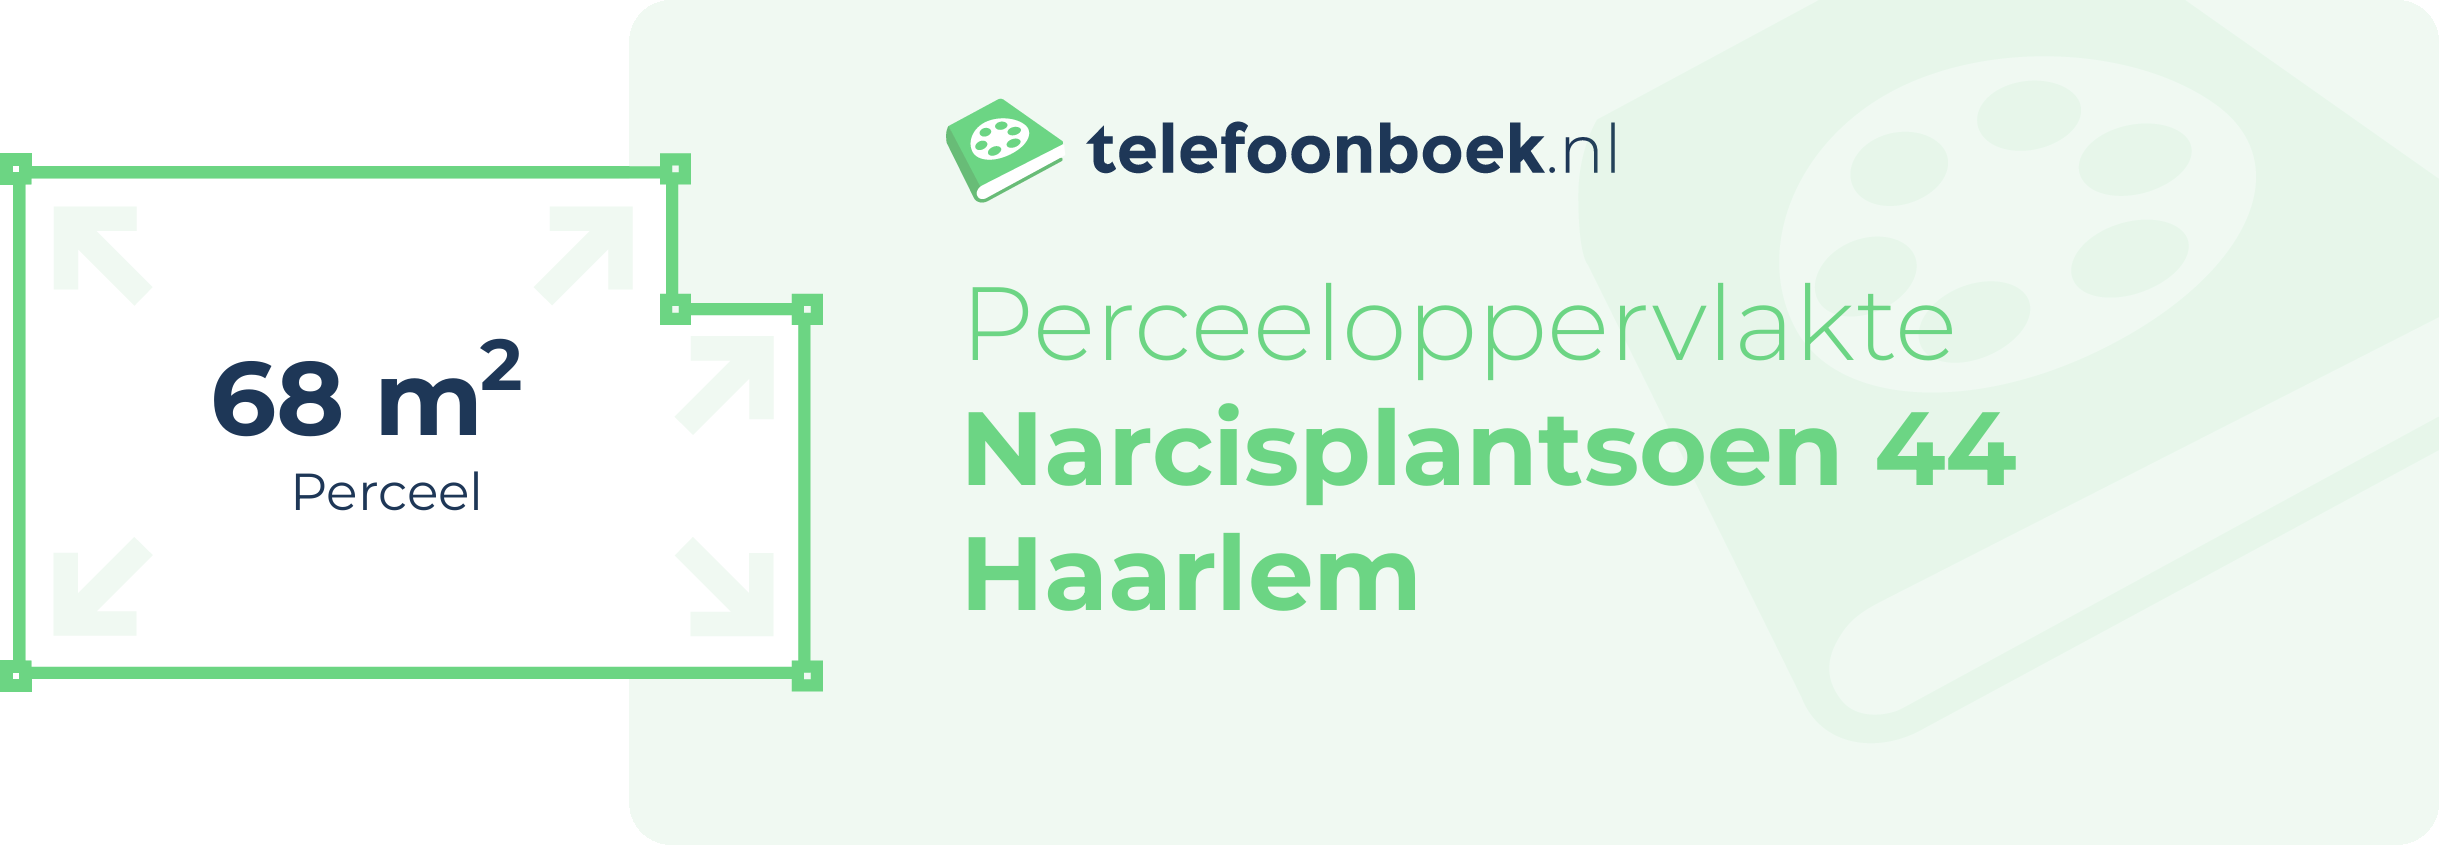 Perceeloppervlakte Narcisplantsoen 44 Haarlem